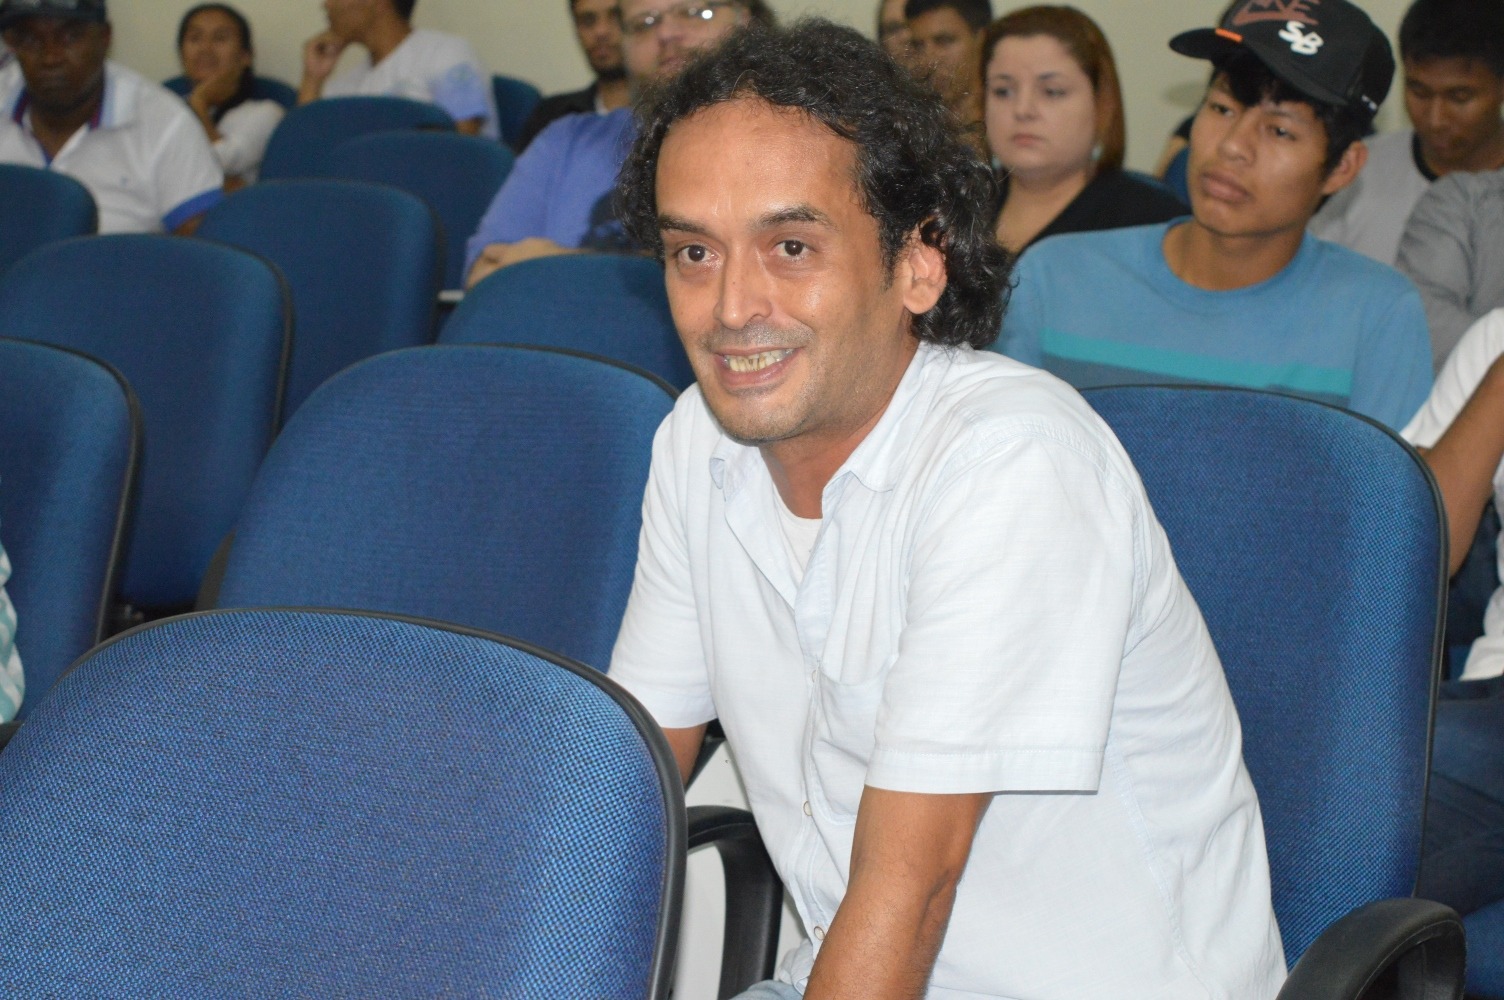 Superintendente do Fundo de Investimentos Culturais (FIC), Ricardo Maia dos Santos,